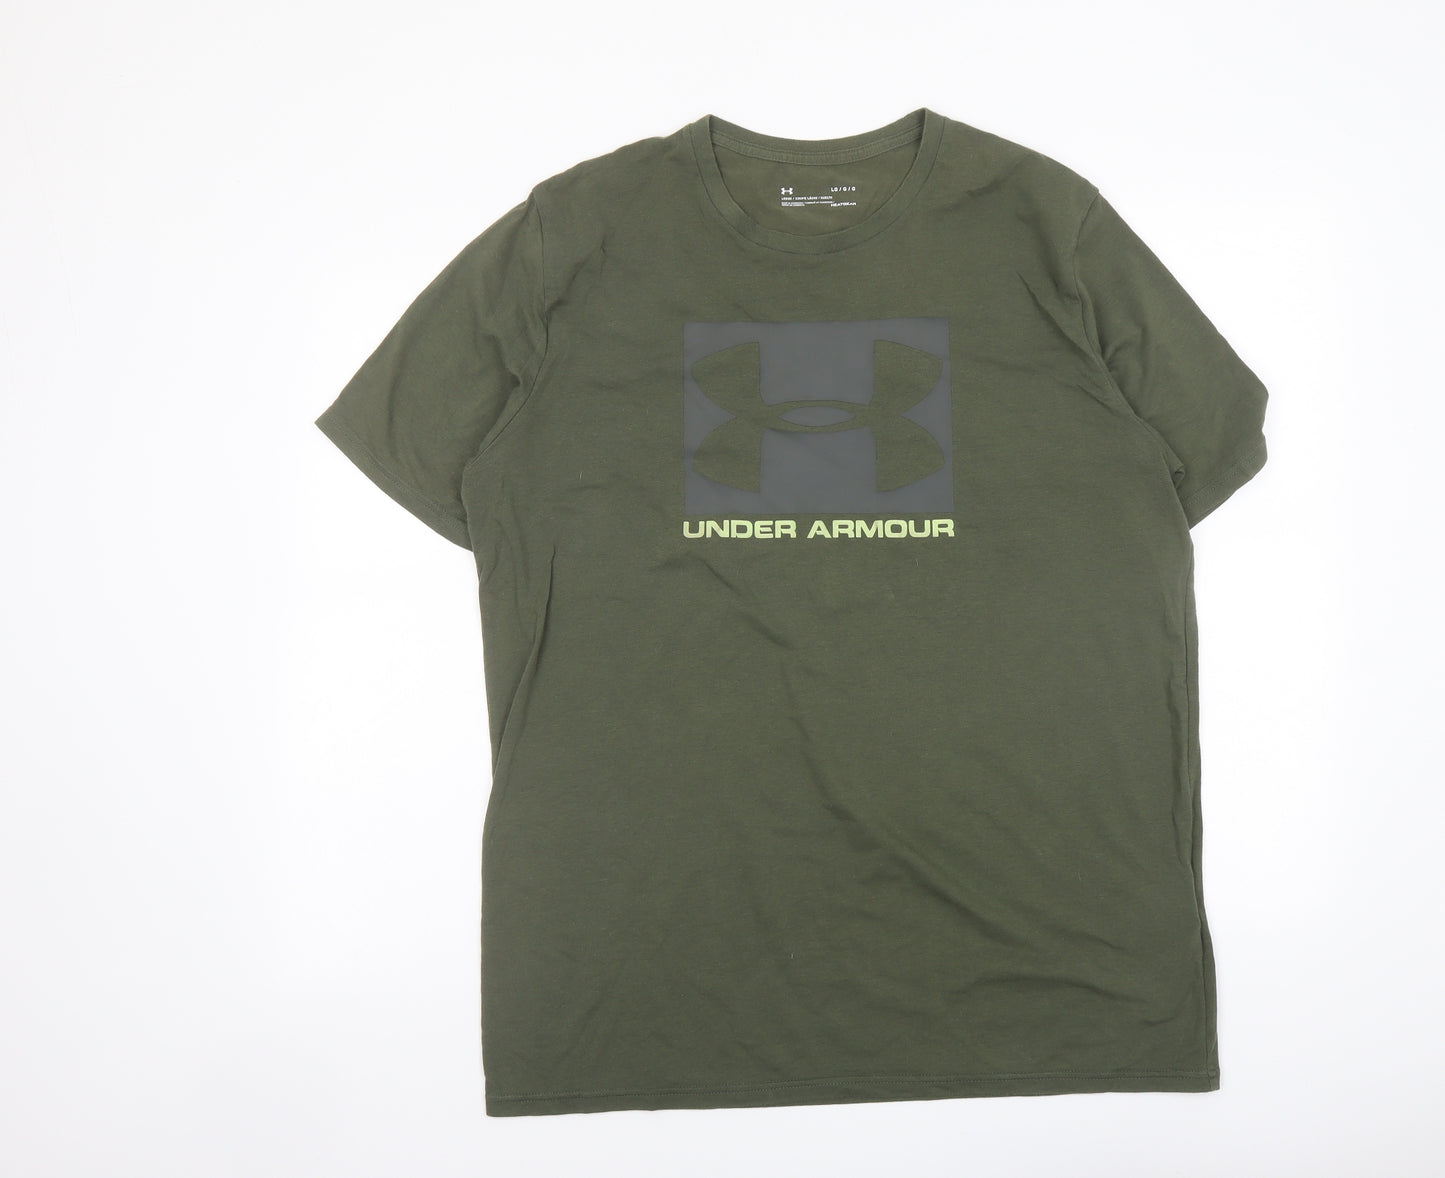 Under armour Mens Green Cotton T-Shirt Size L Crew Neck